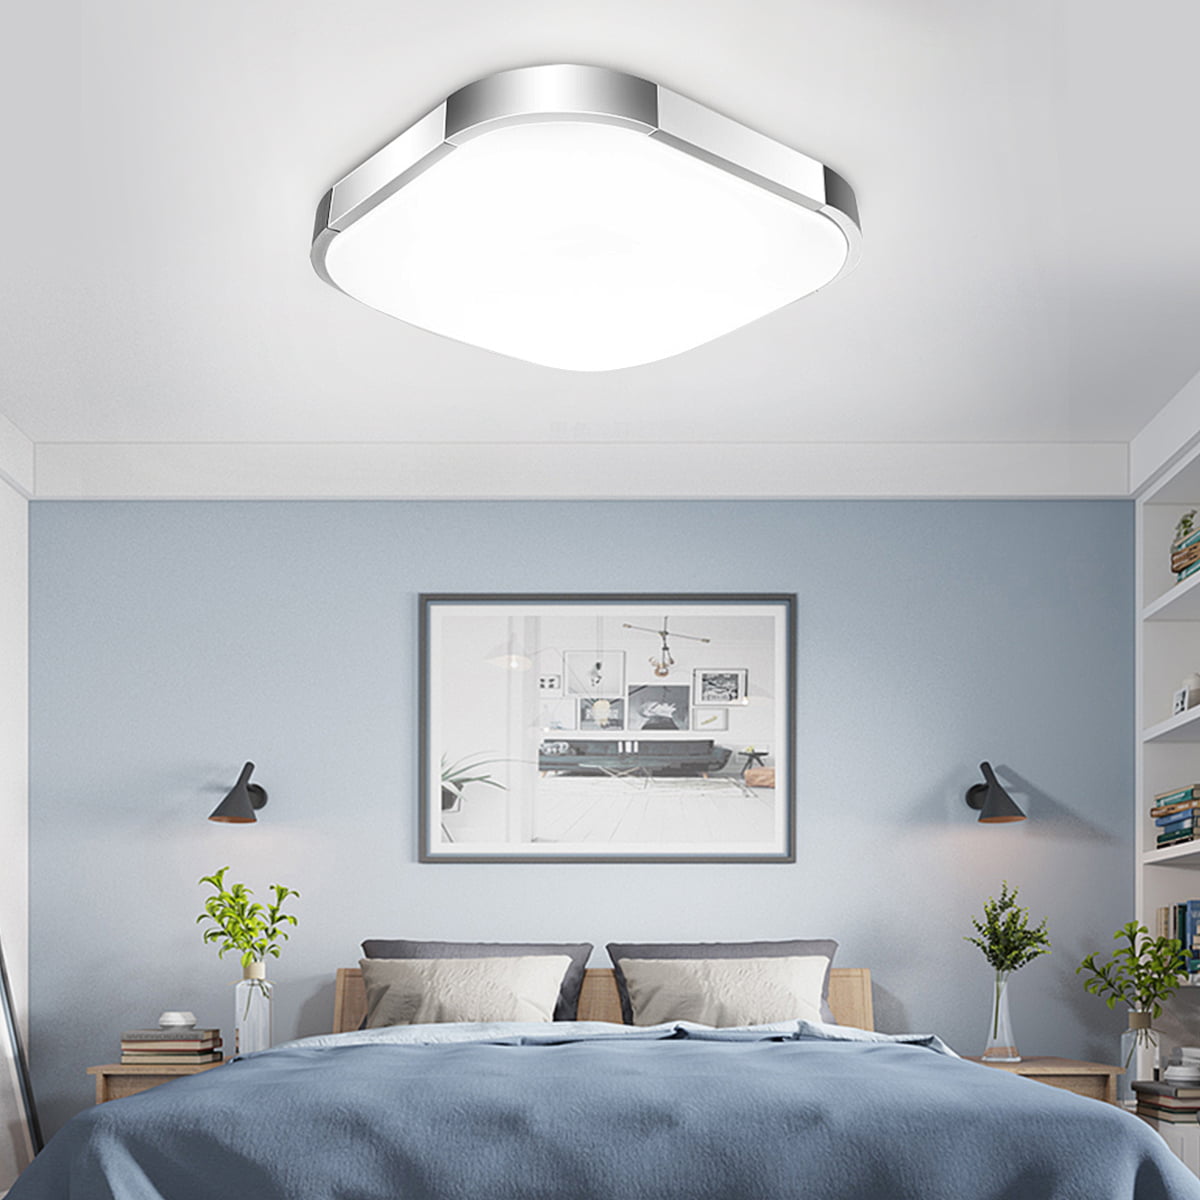 LED 48 W Industrial Daylight Ceiling Bath Lamp Wet Room Lamp 3840 Lumens 